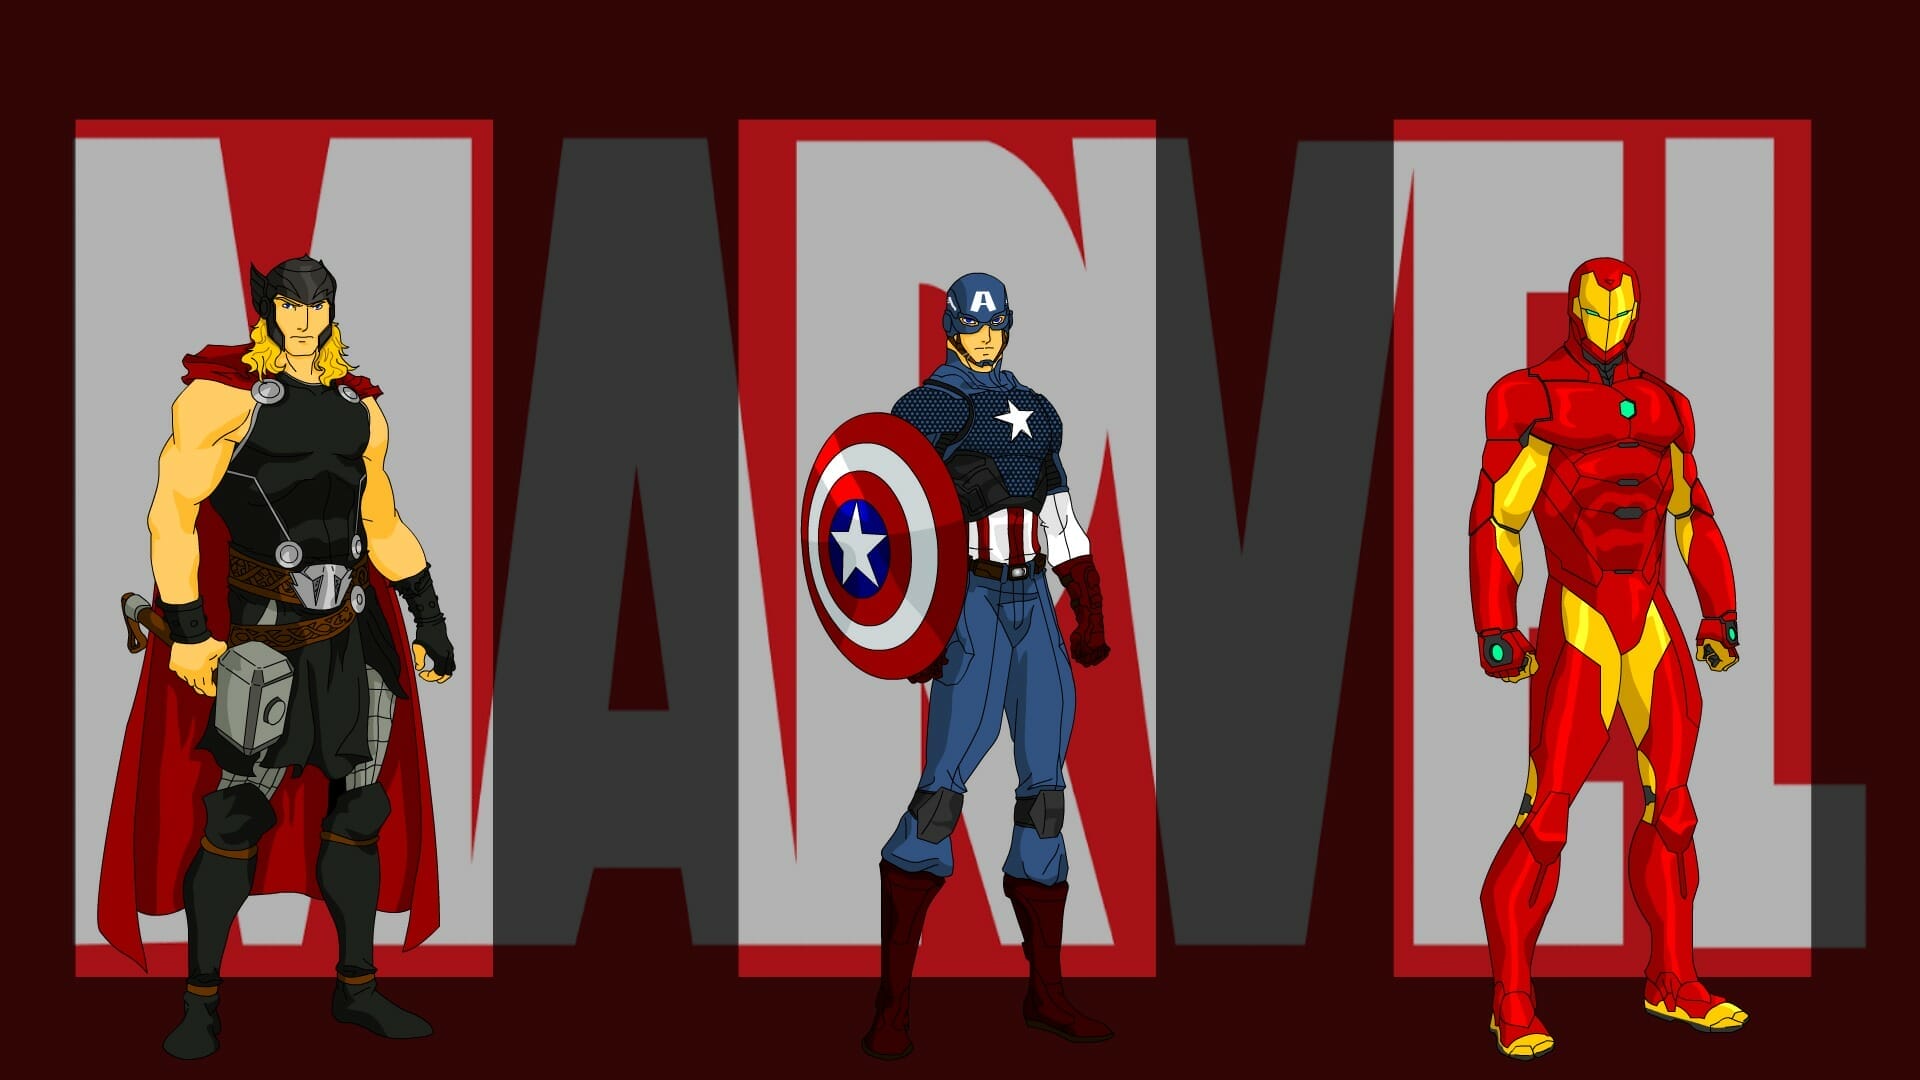 Marvel Wallpaper - Avengers 01 by Joao Norberto